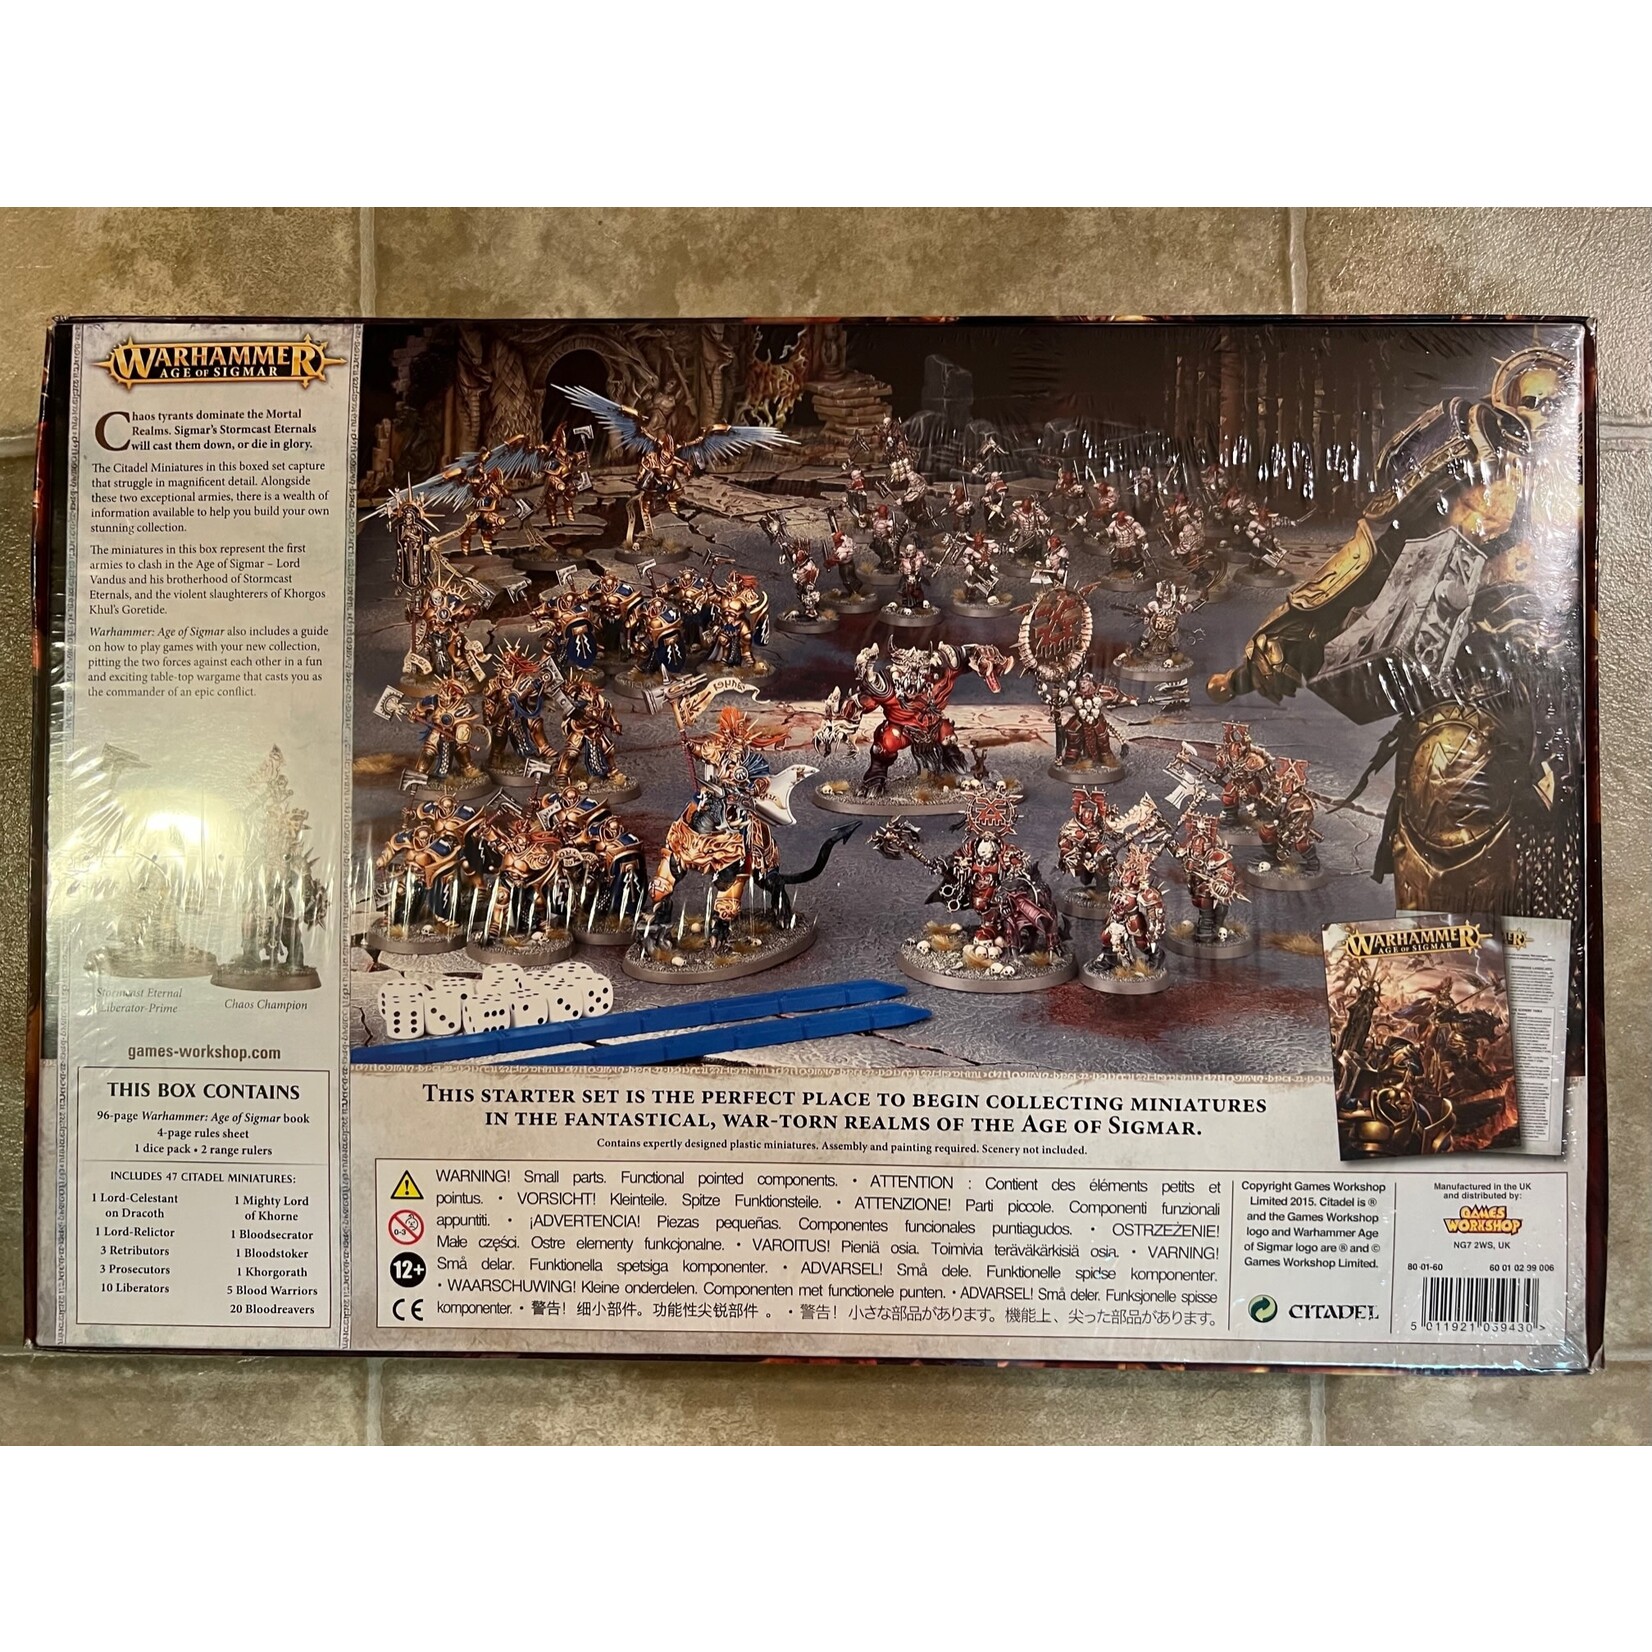 Warhammer Age of Sigmar Box Set (2015)